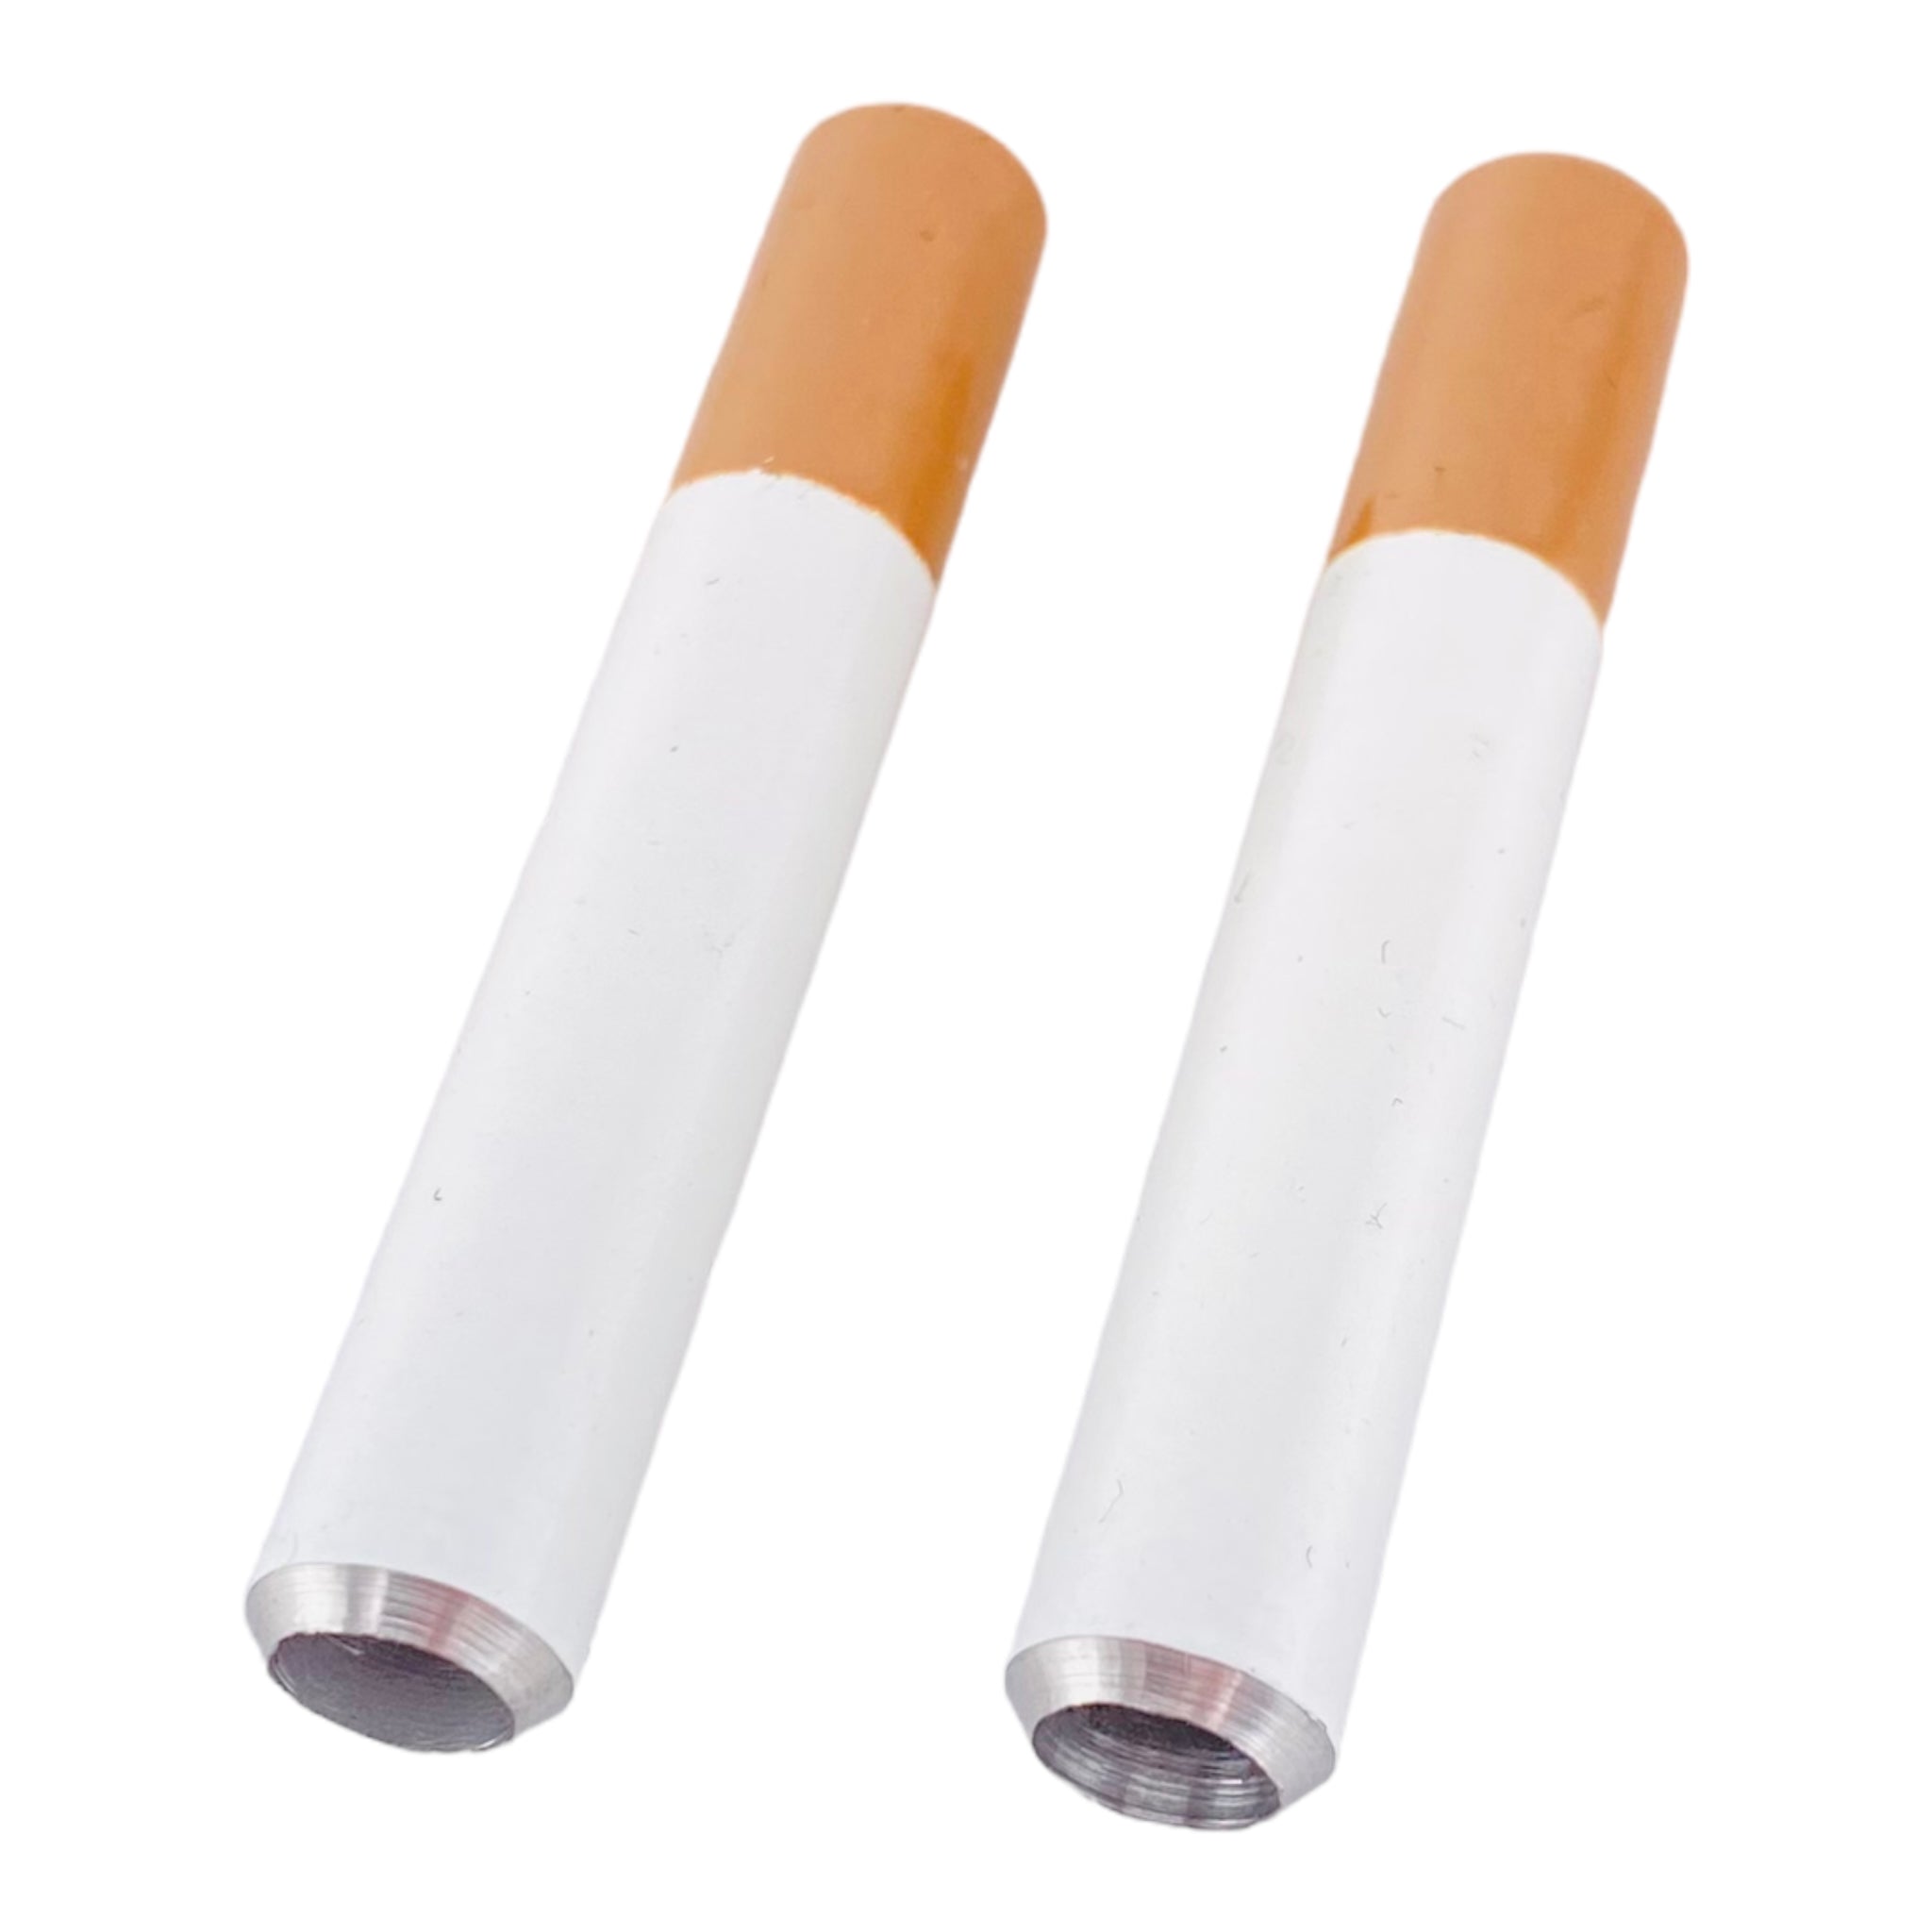 Small Metal Cigarette One Hitter Chillum - 2ct